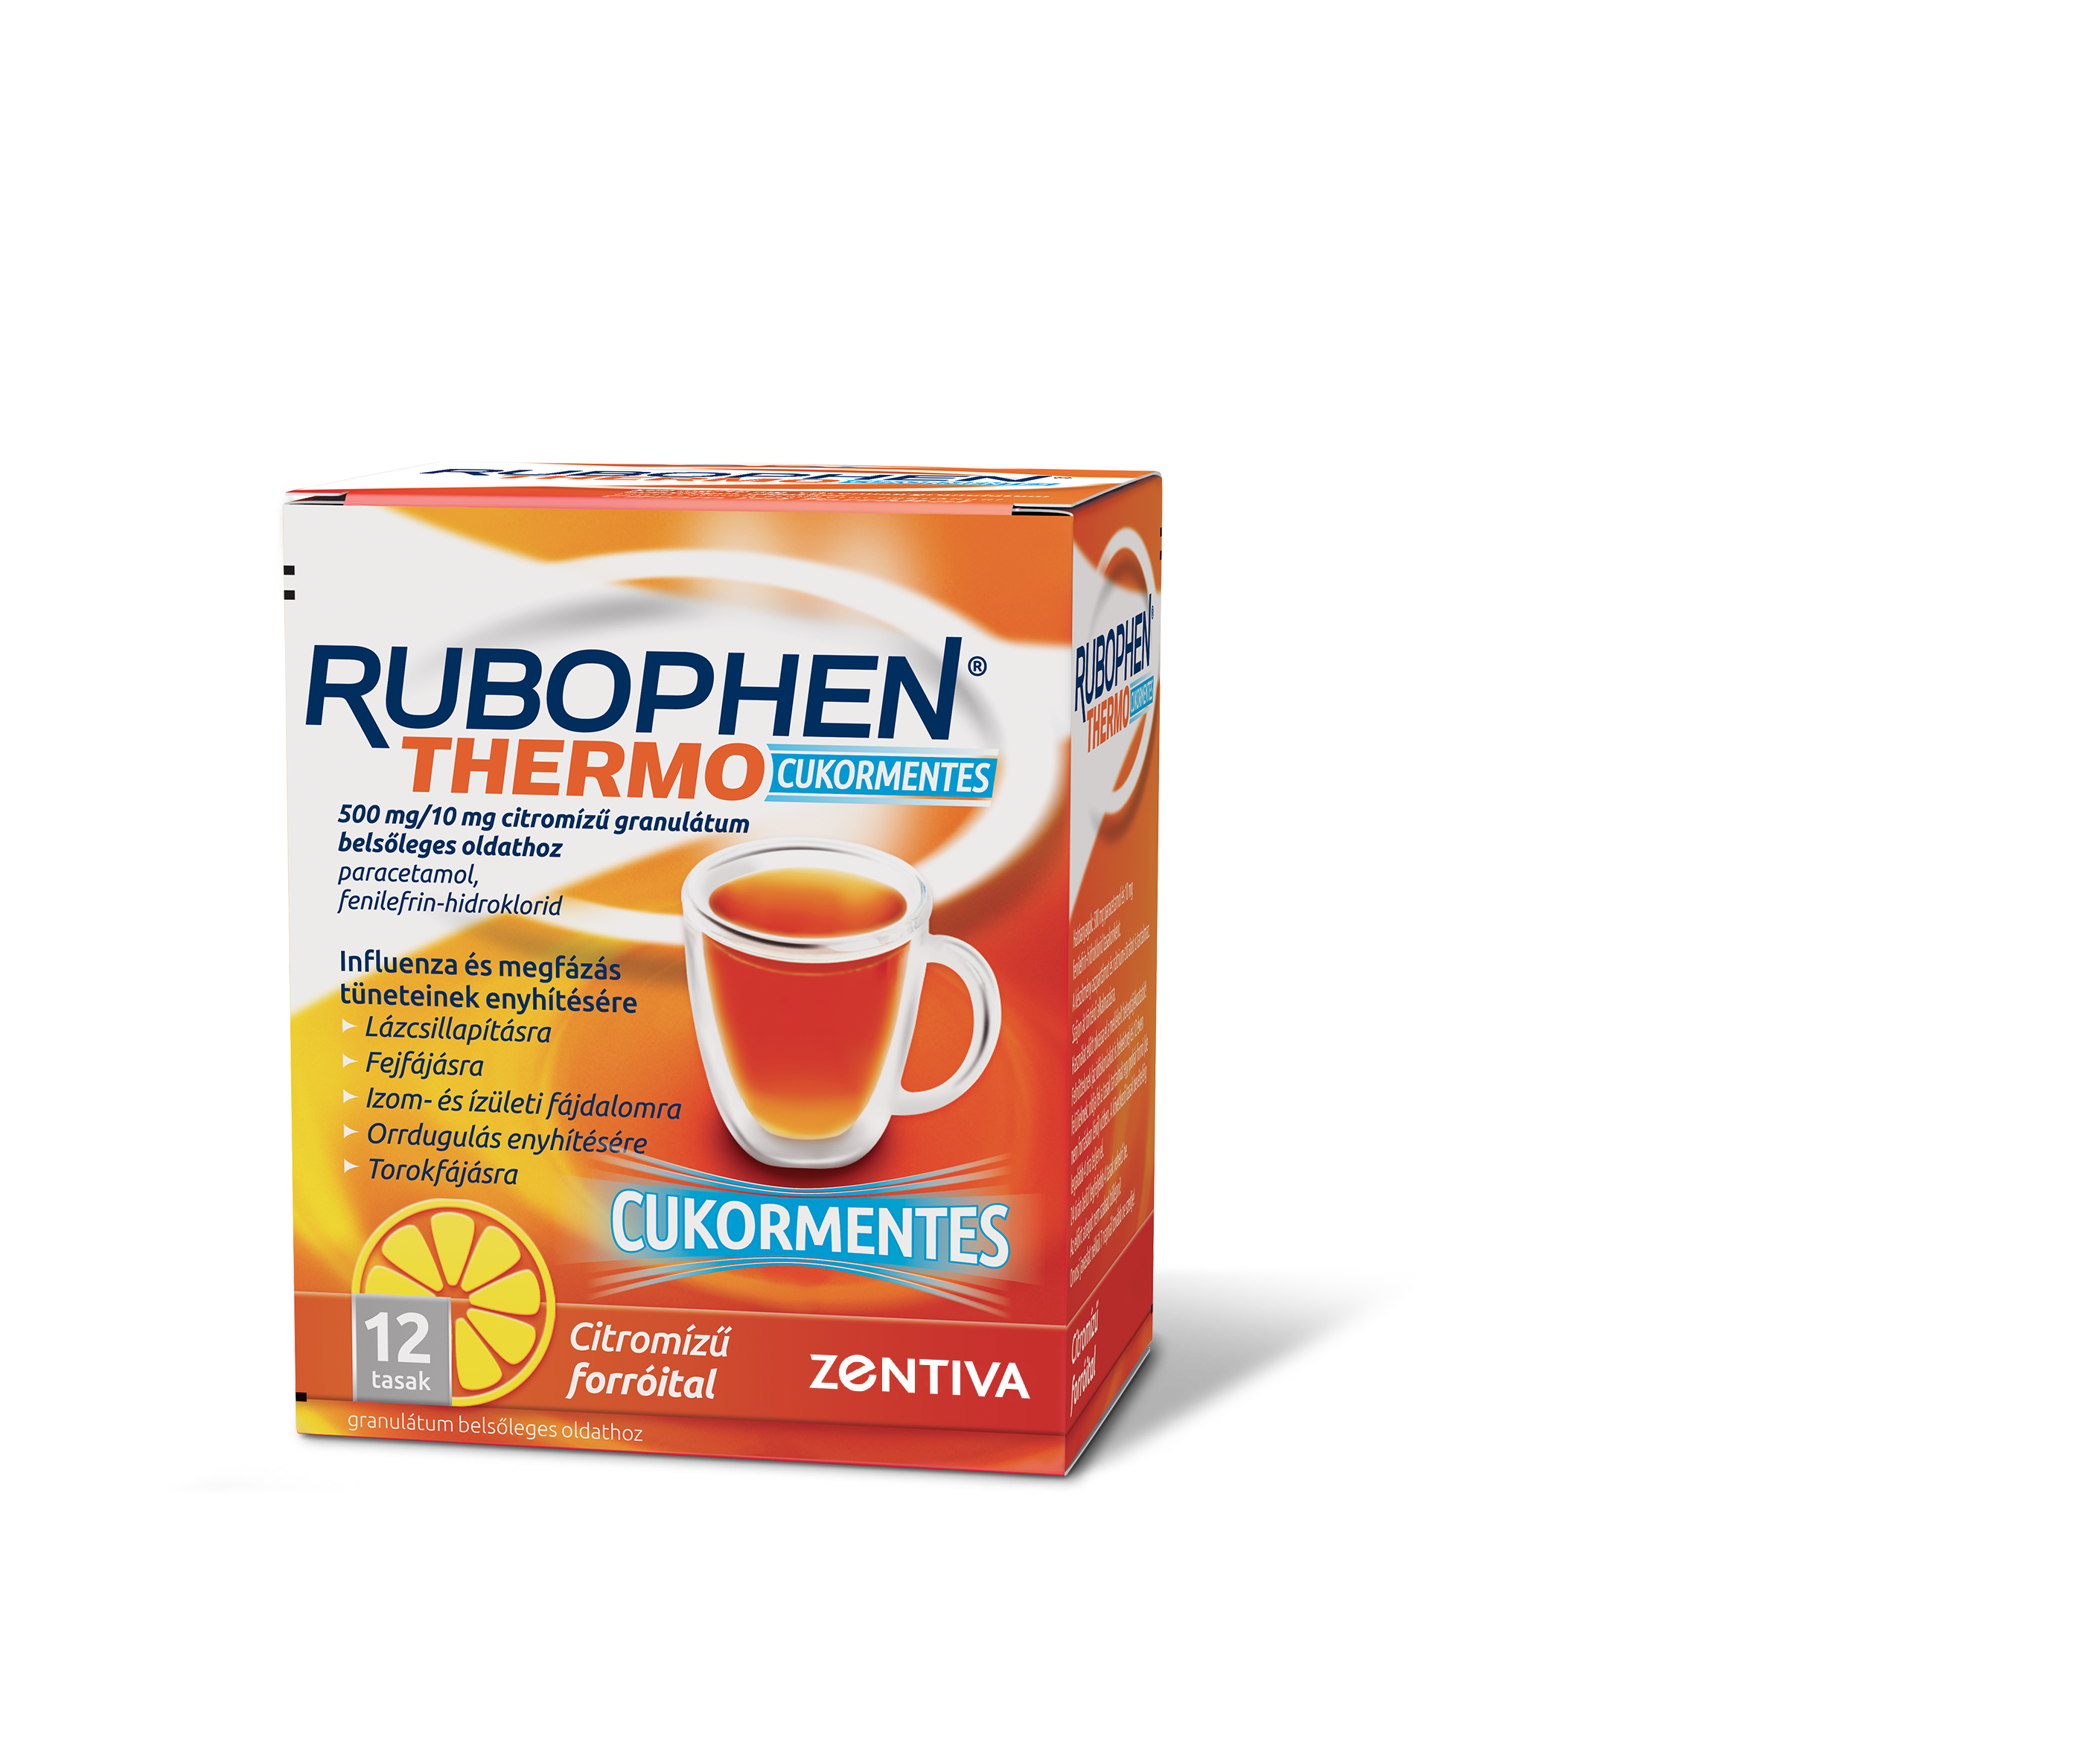 Rubophen Thermo 500 mg/10 mg cukormentes granulátum belsőleges oldathoz